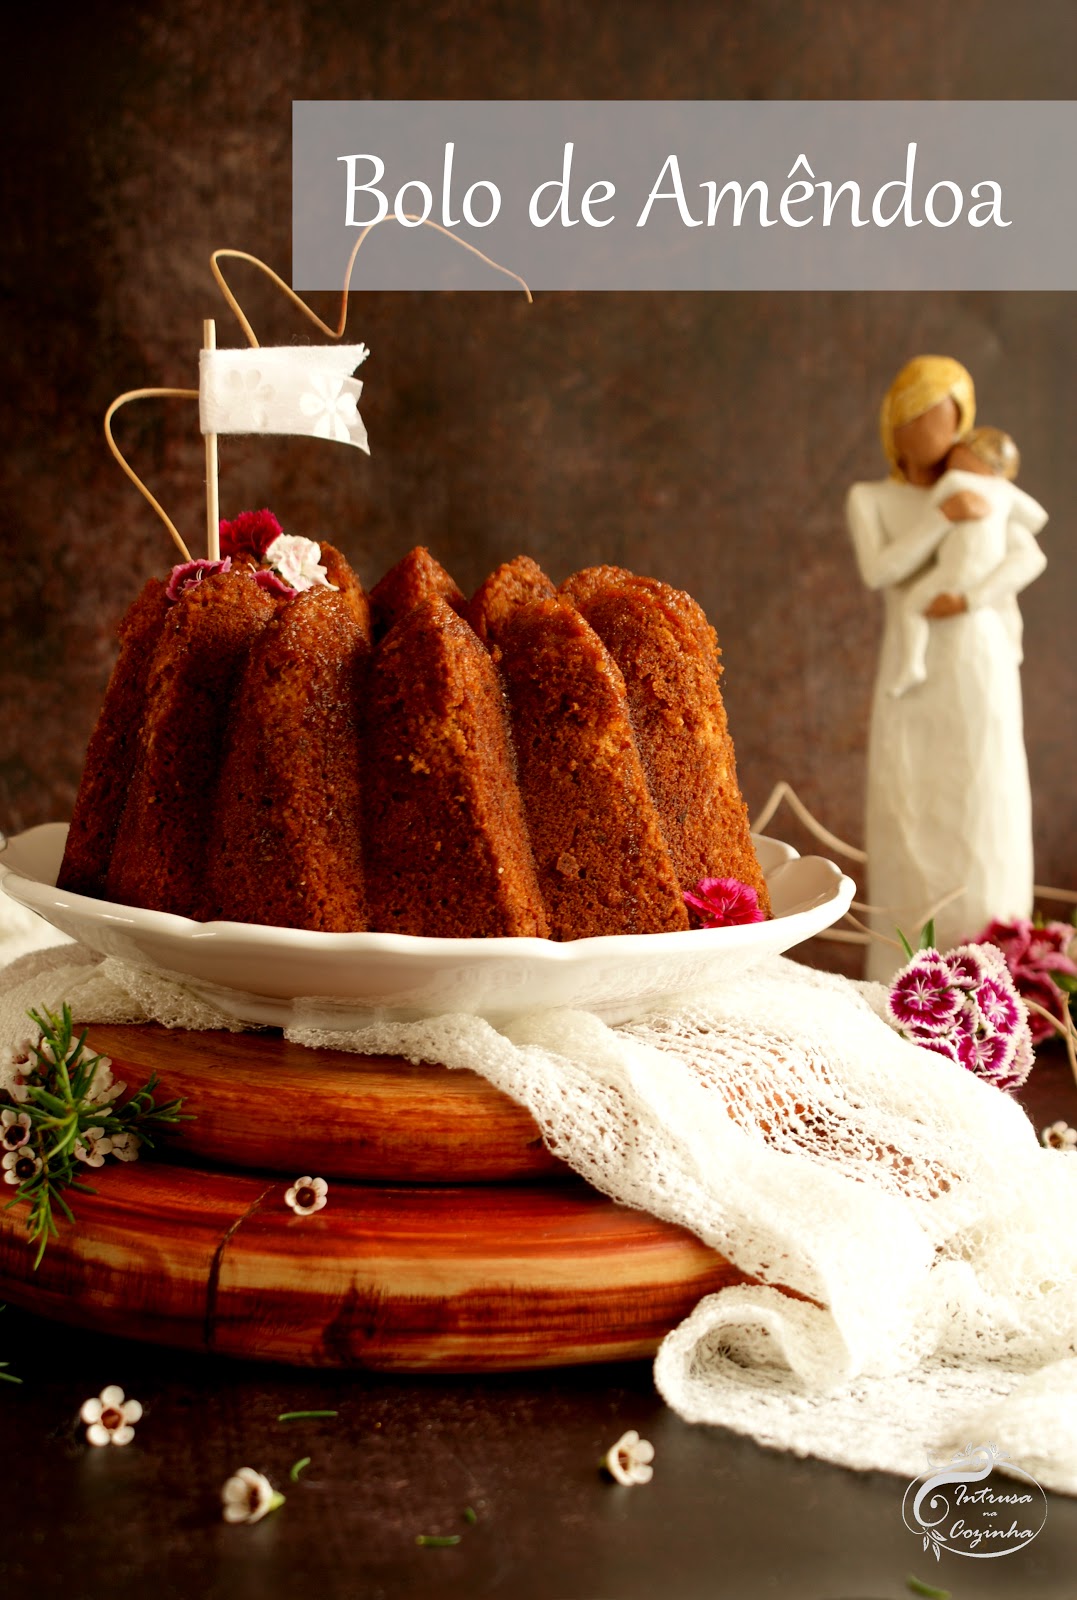 Bolo de Amêndoa (Almond Bundt Cake)